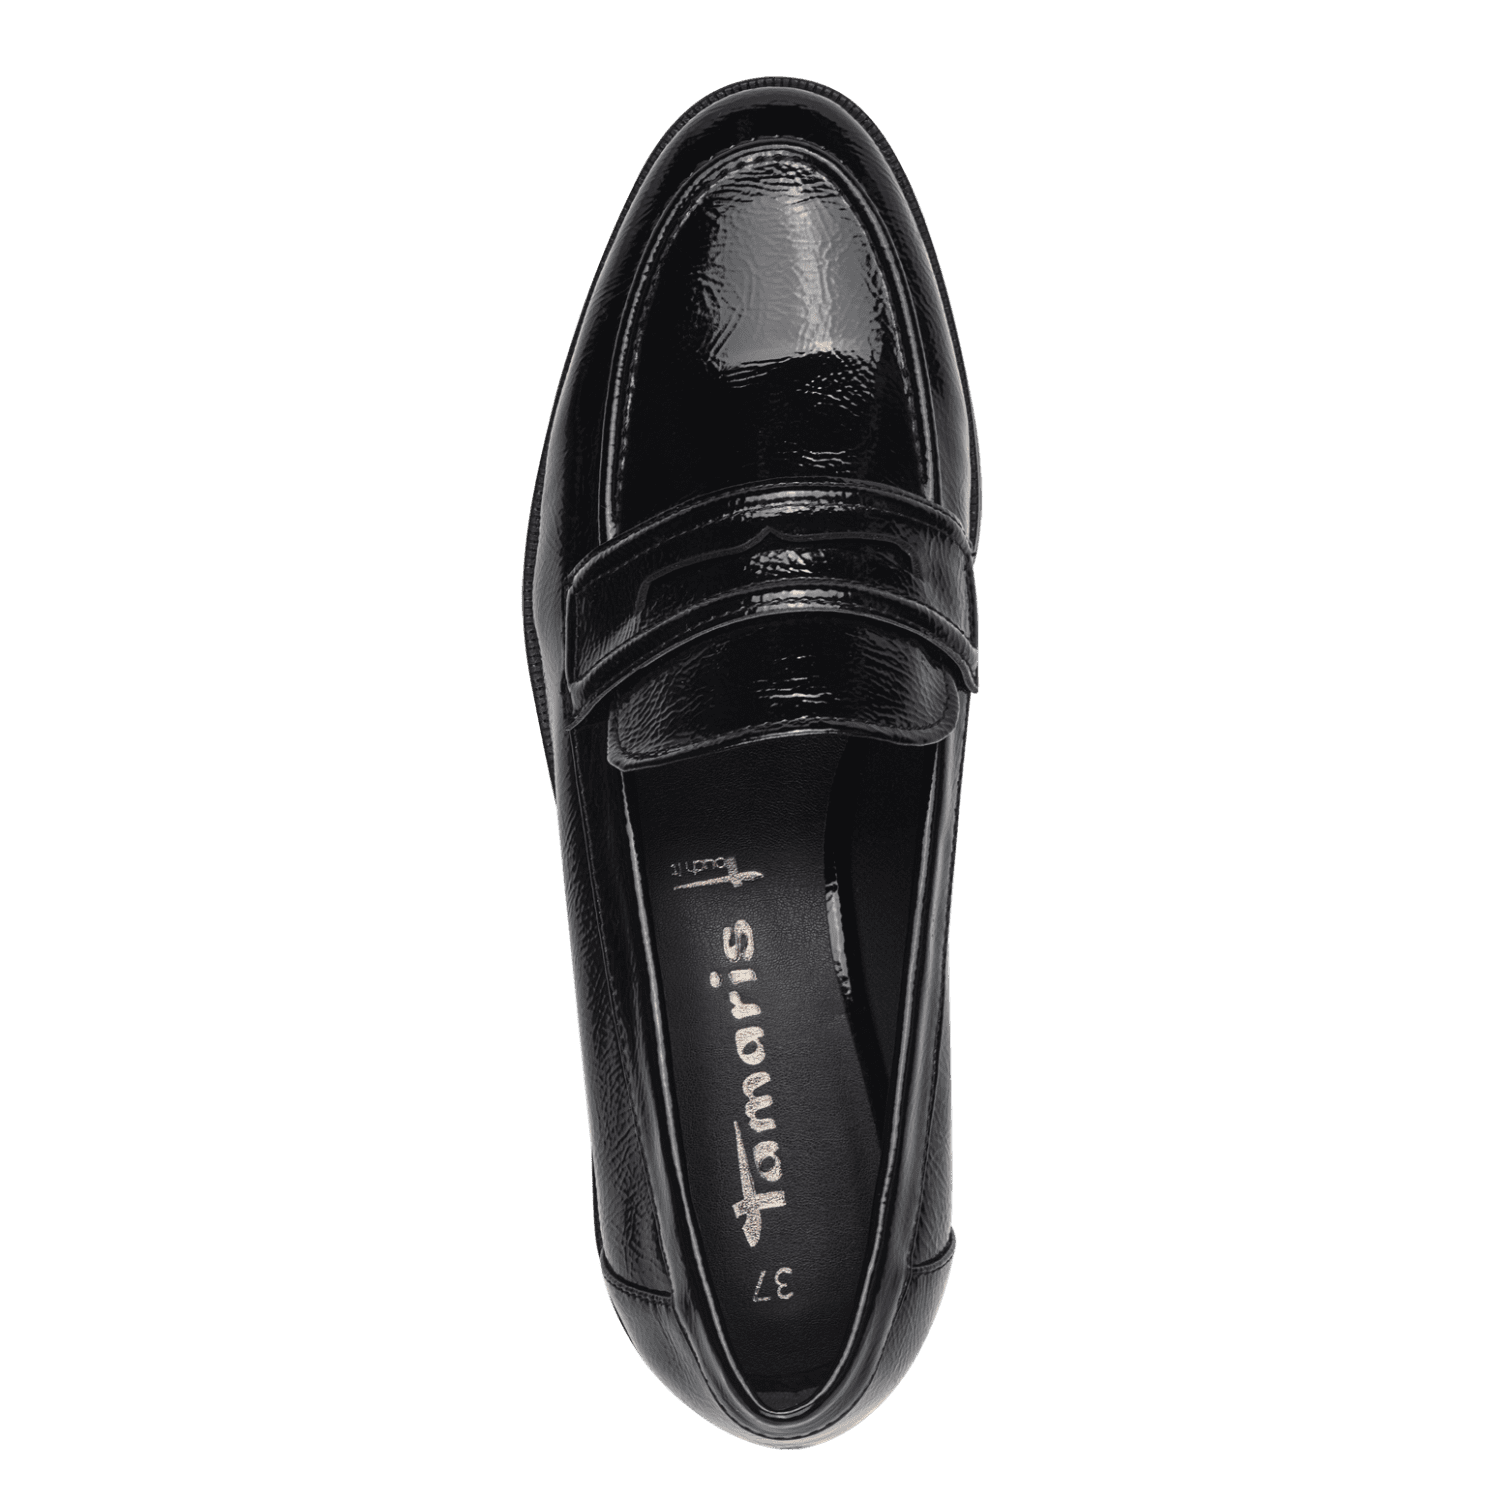 Pantofi Bia Black Patent - Tamaris